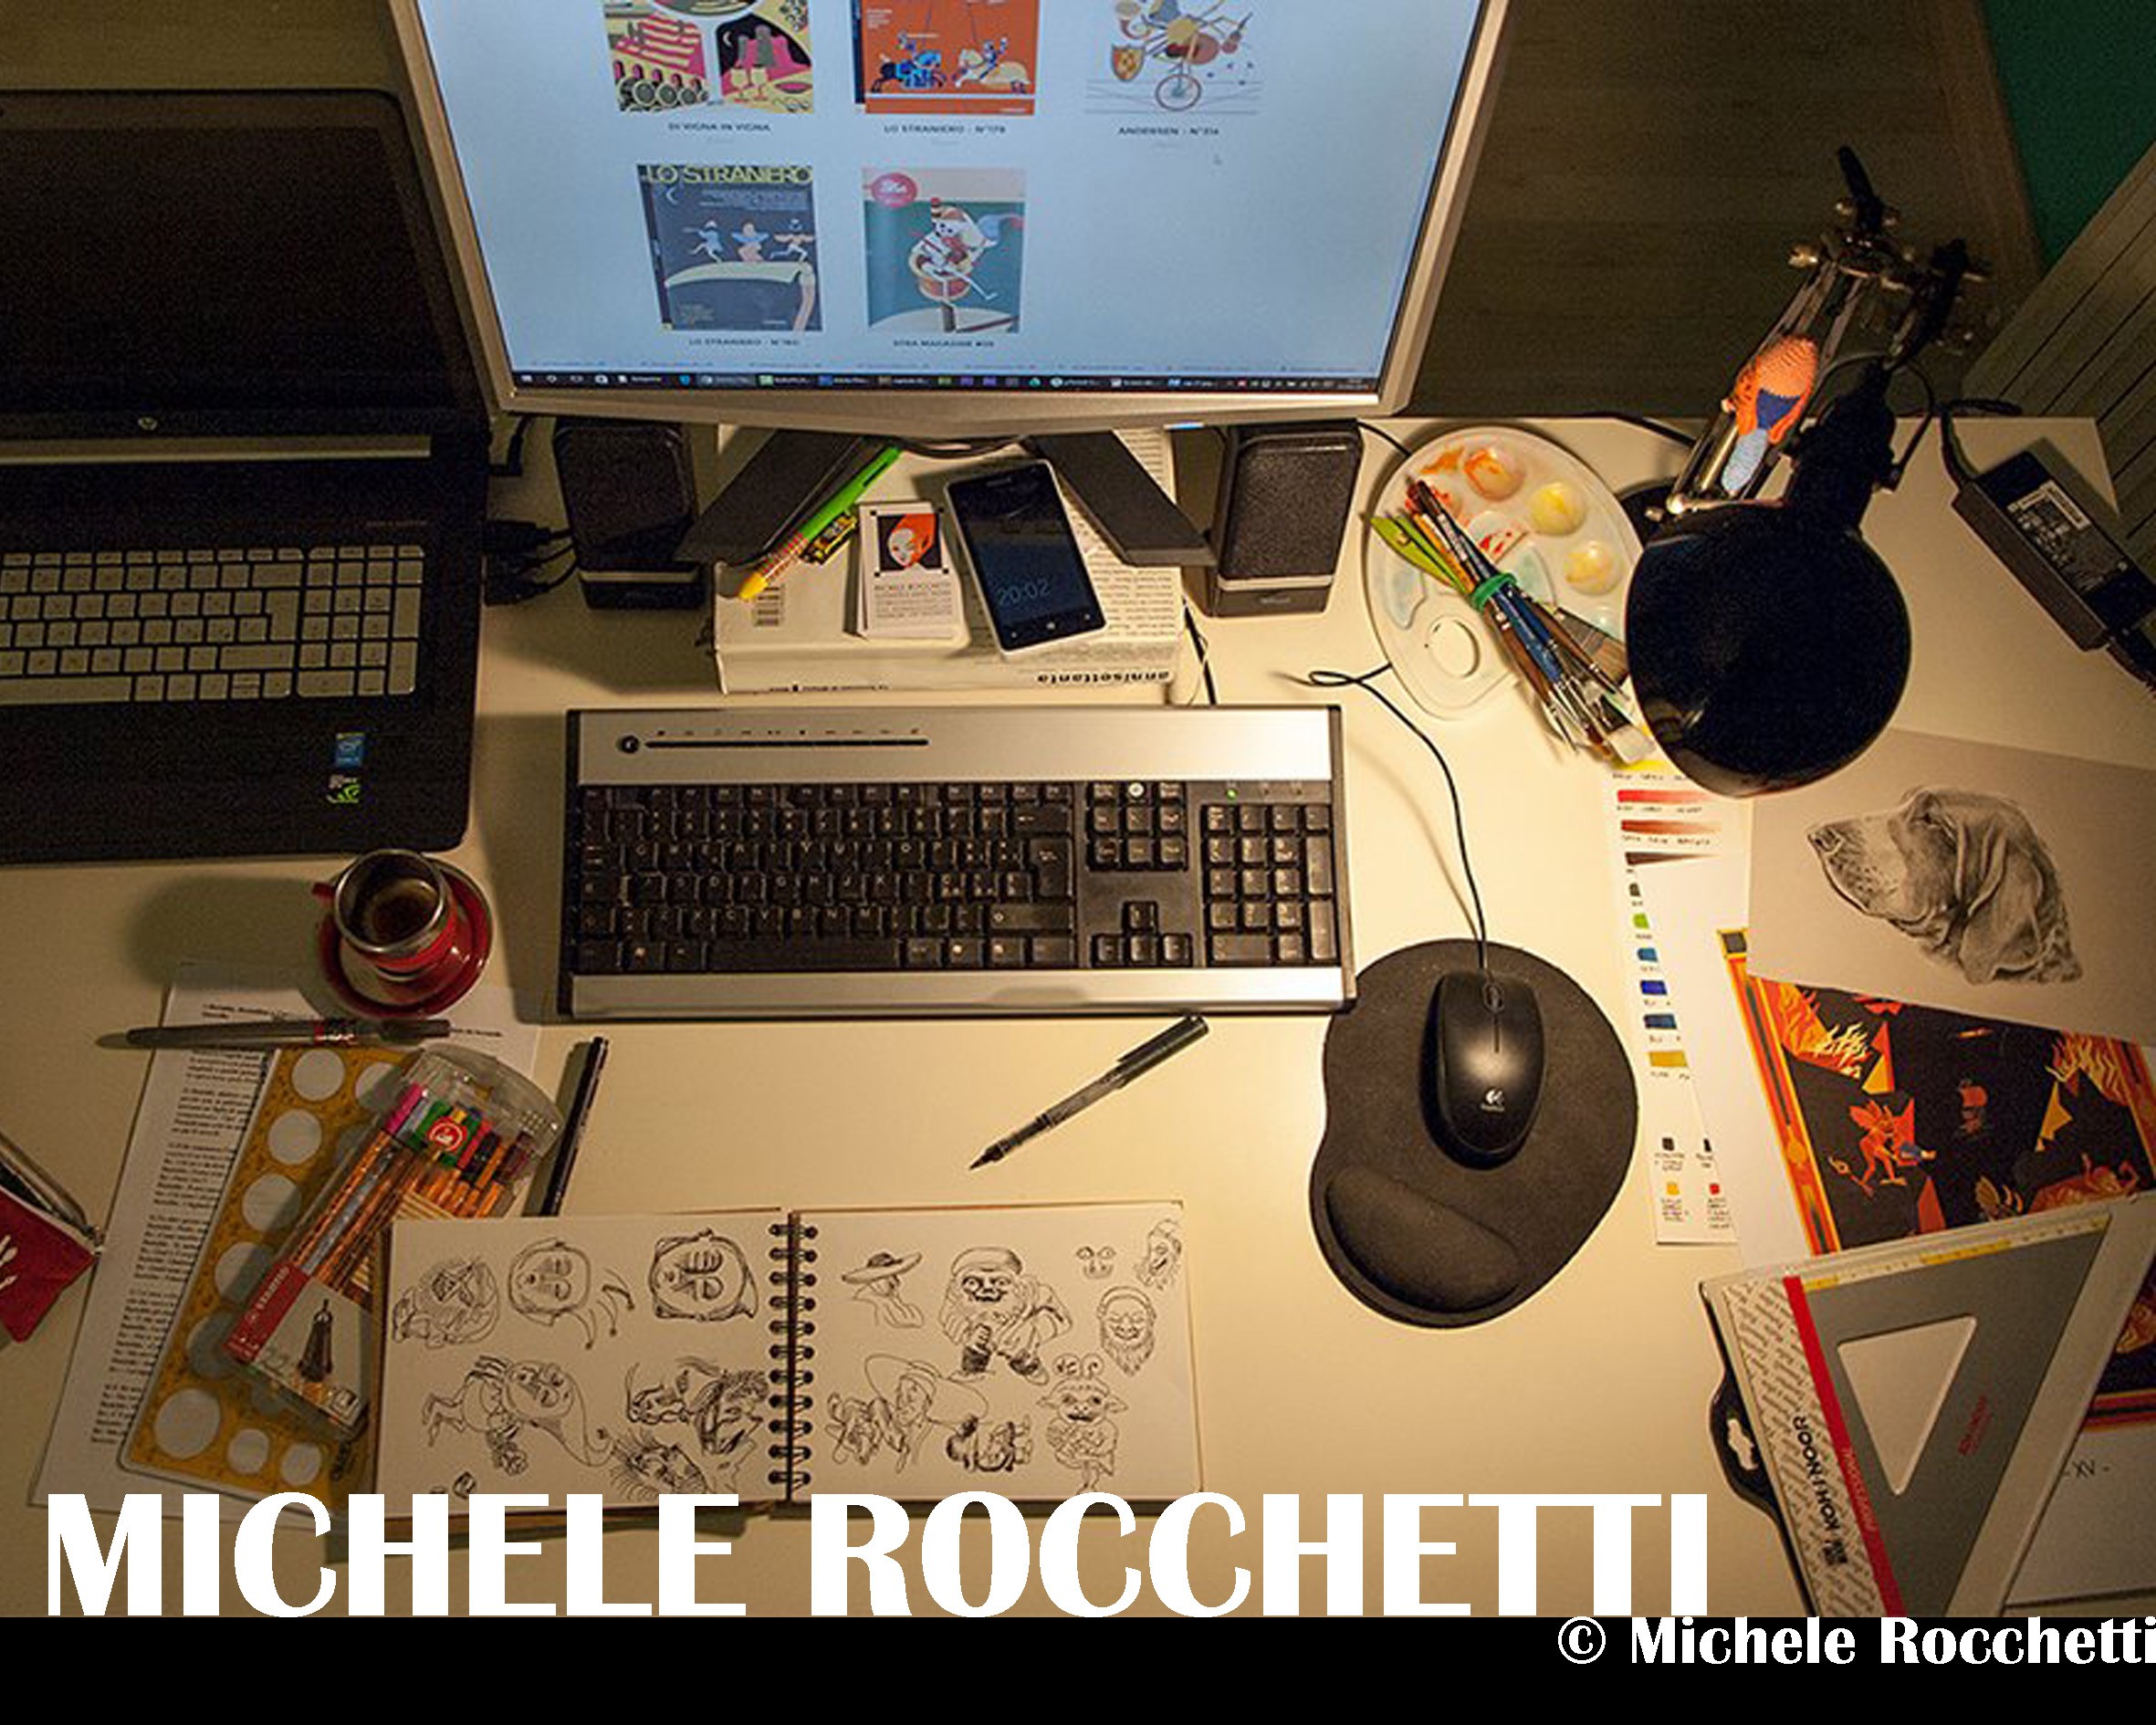 Michele Rocchetti